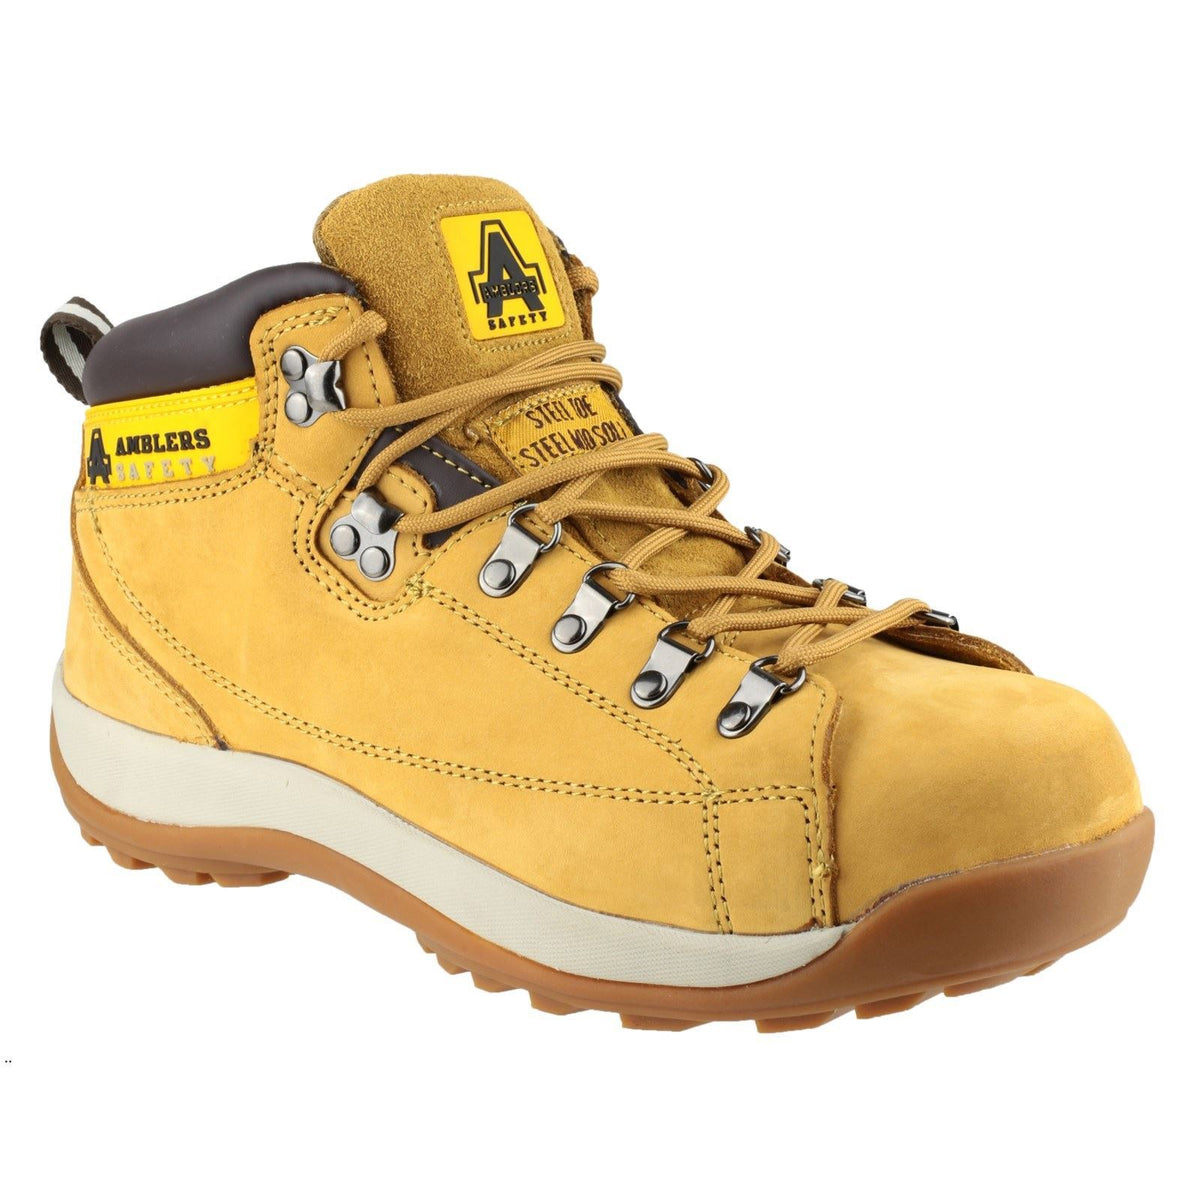 Amblers Safety FS122 Hardwearing Boots